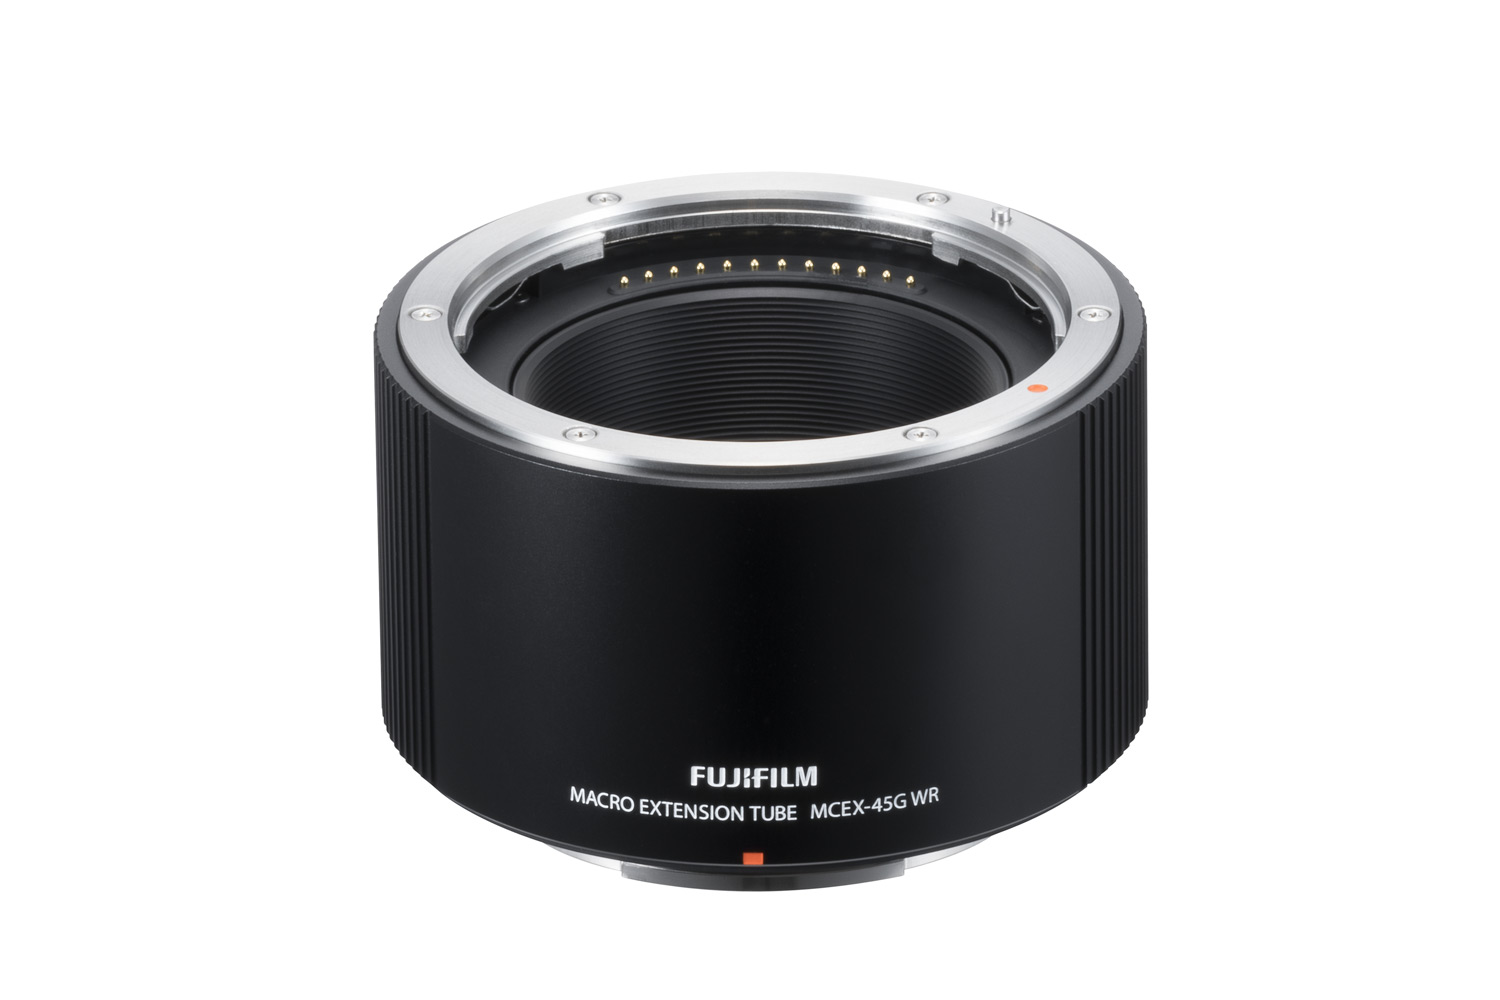 fujifilm gf240mmf4 x series firmware updates gfx extension tube 45g